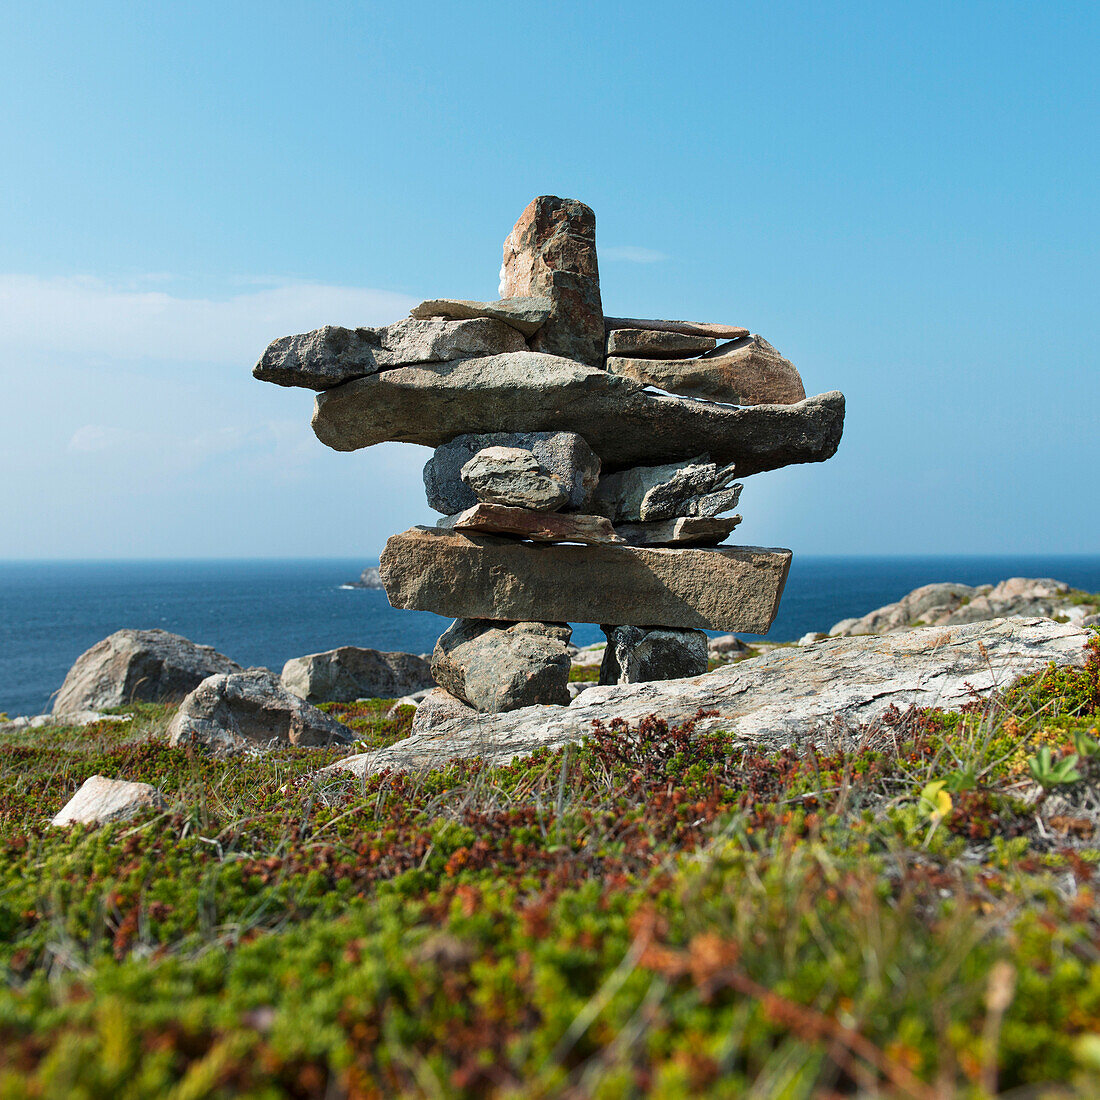 'Cairn on the shore of the atlantic coast; Newfoundland and Labrador, Canada'